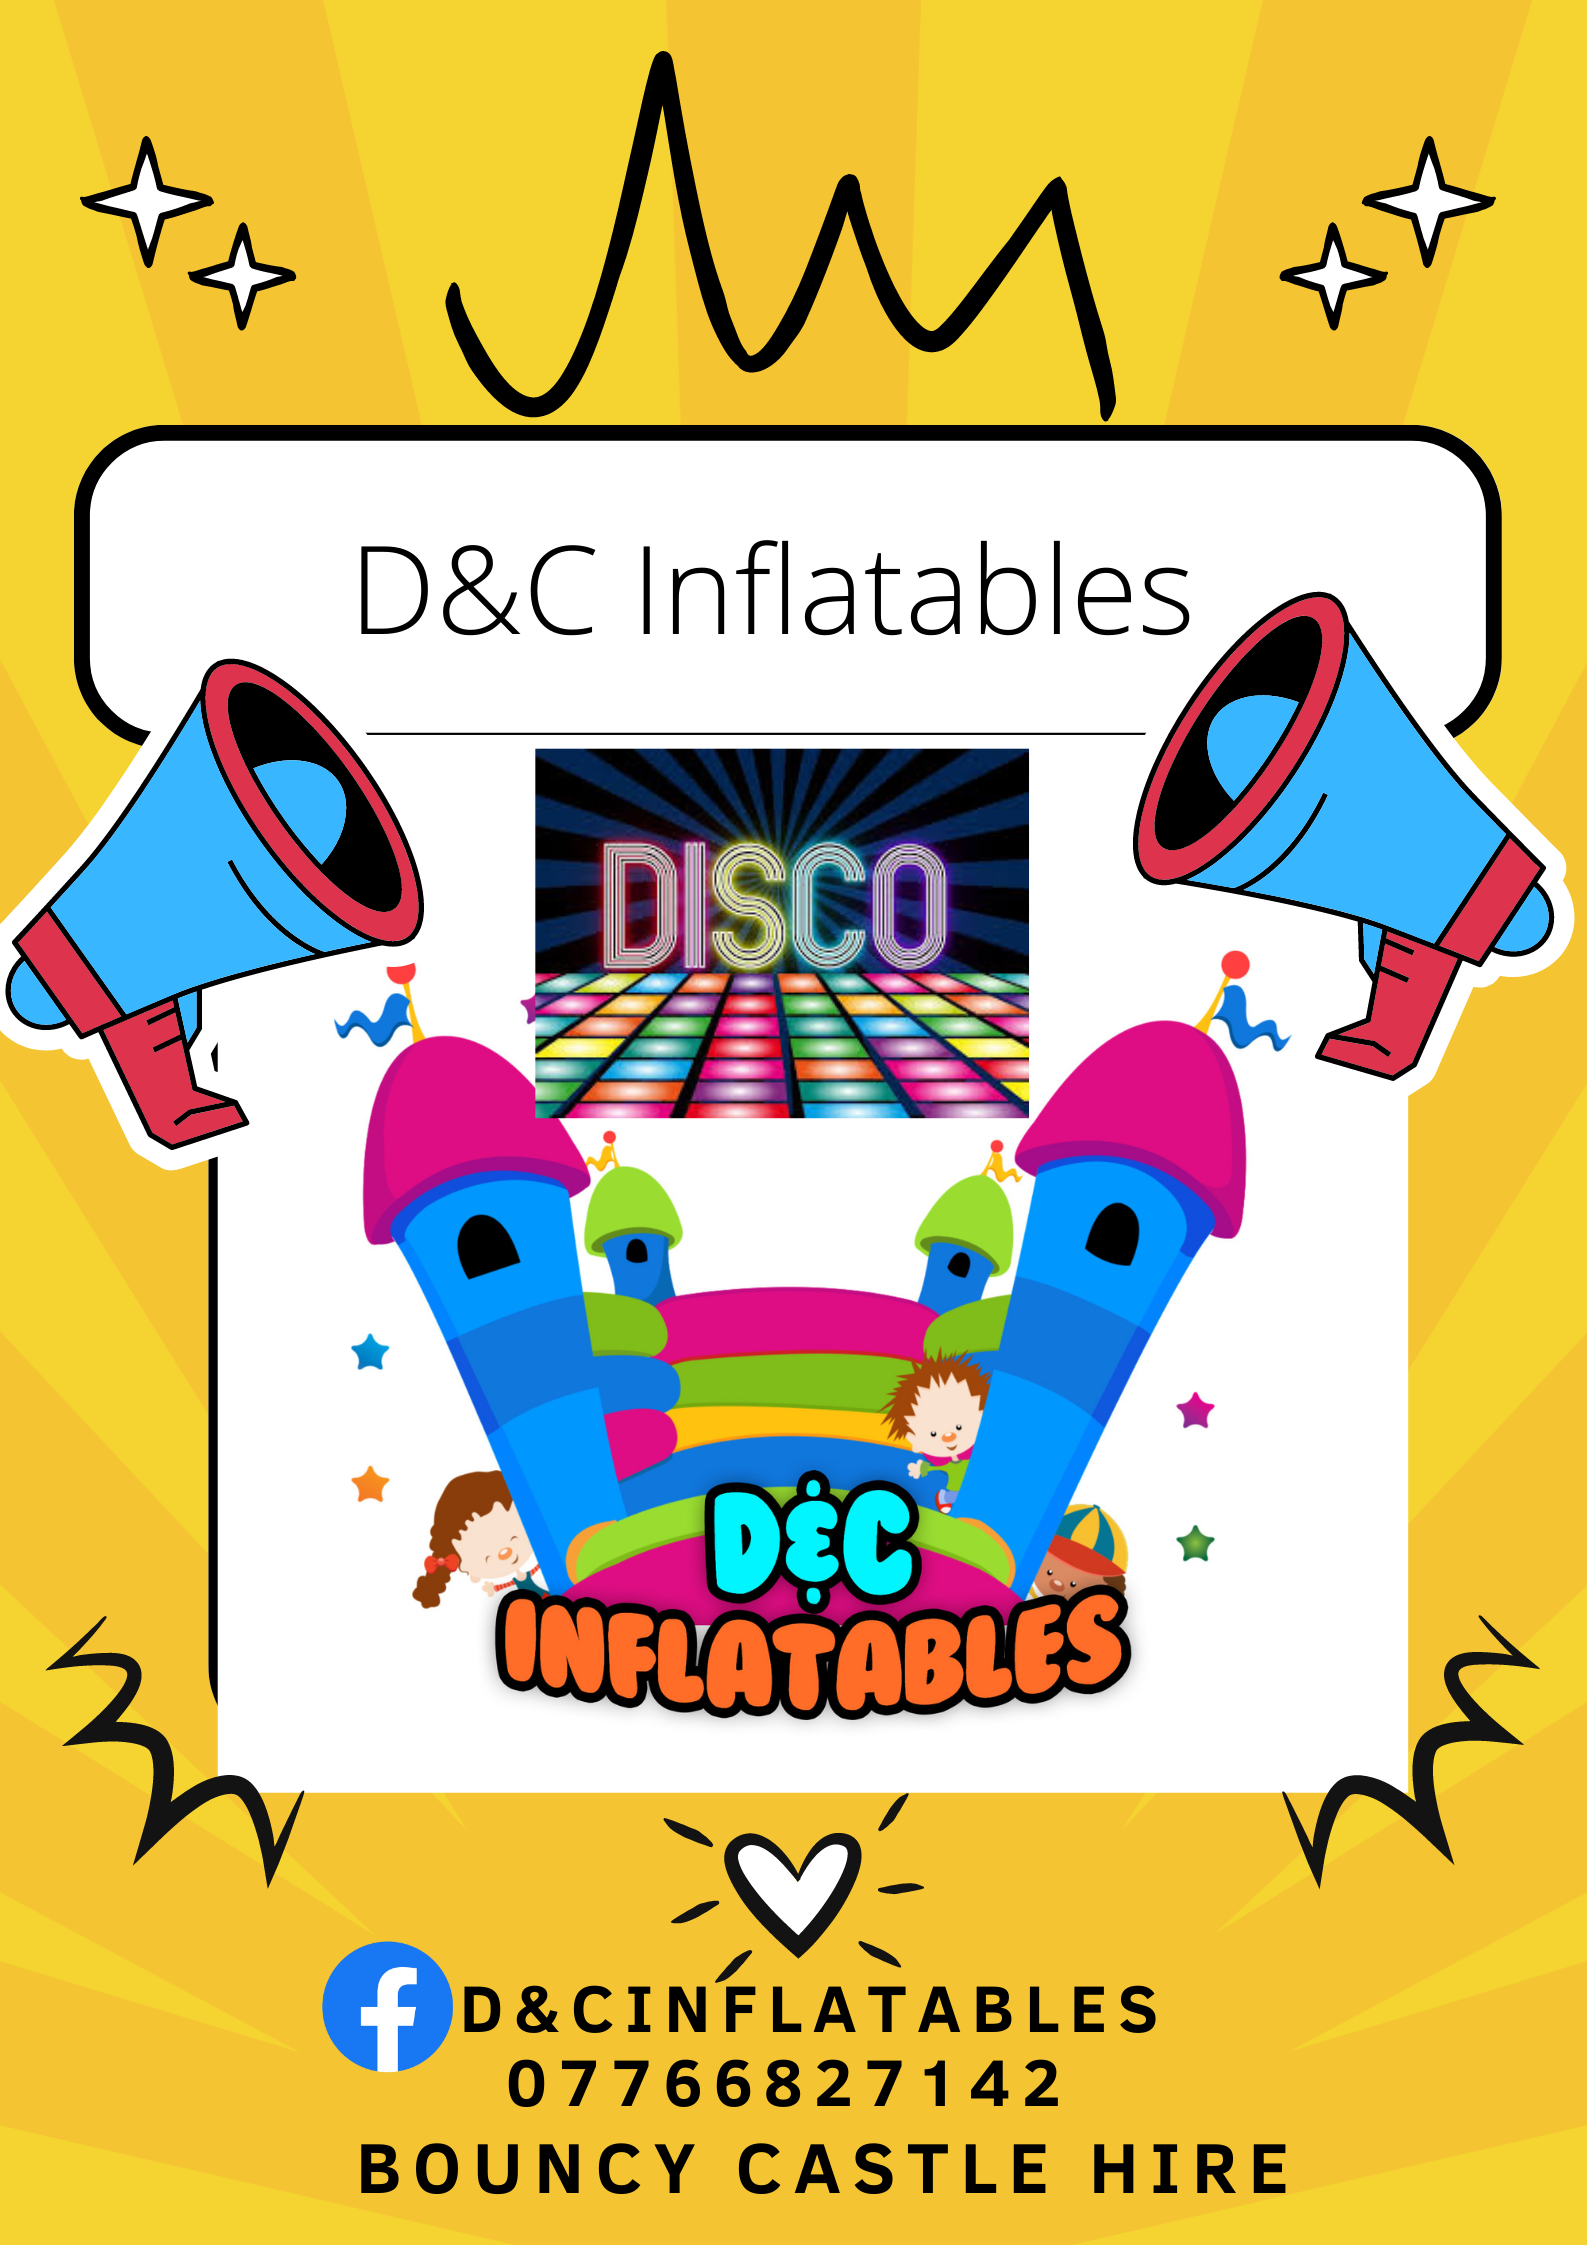 D&C Inflatables